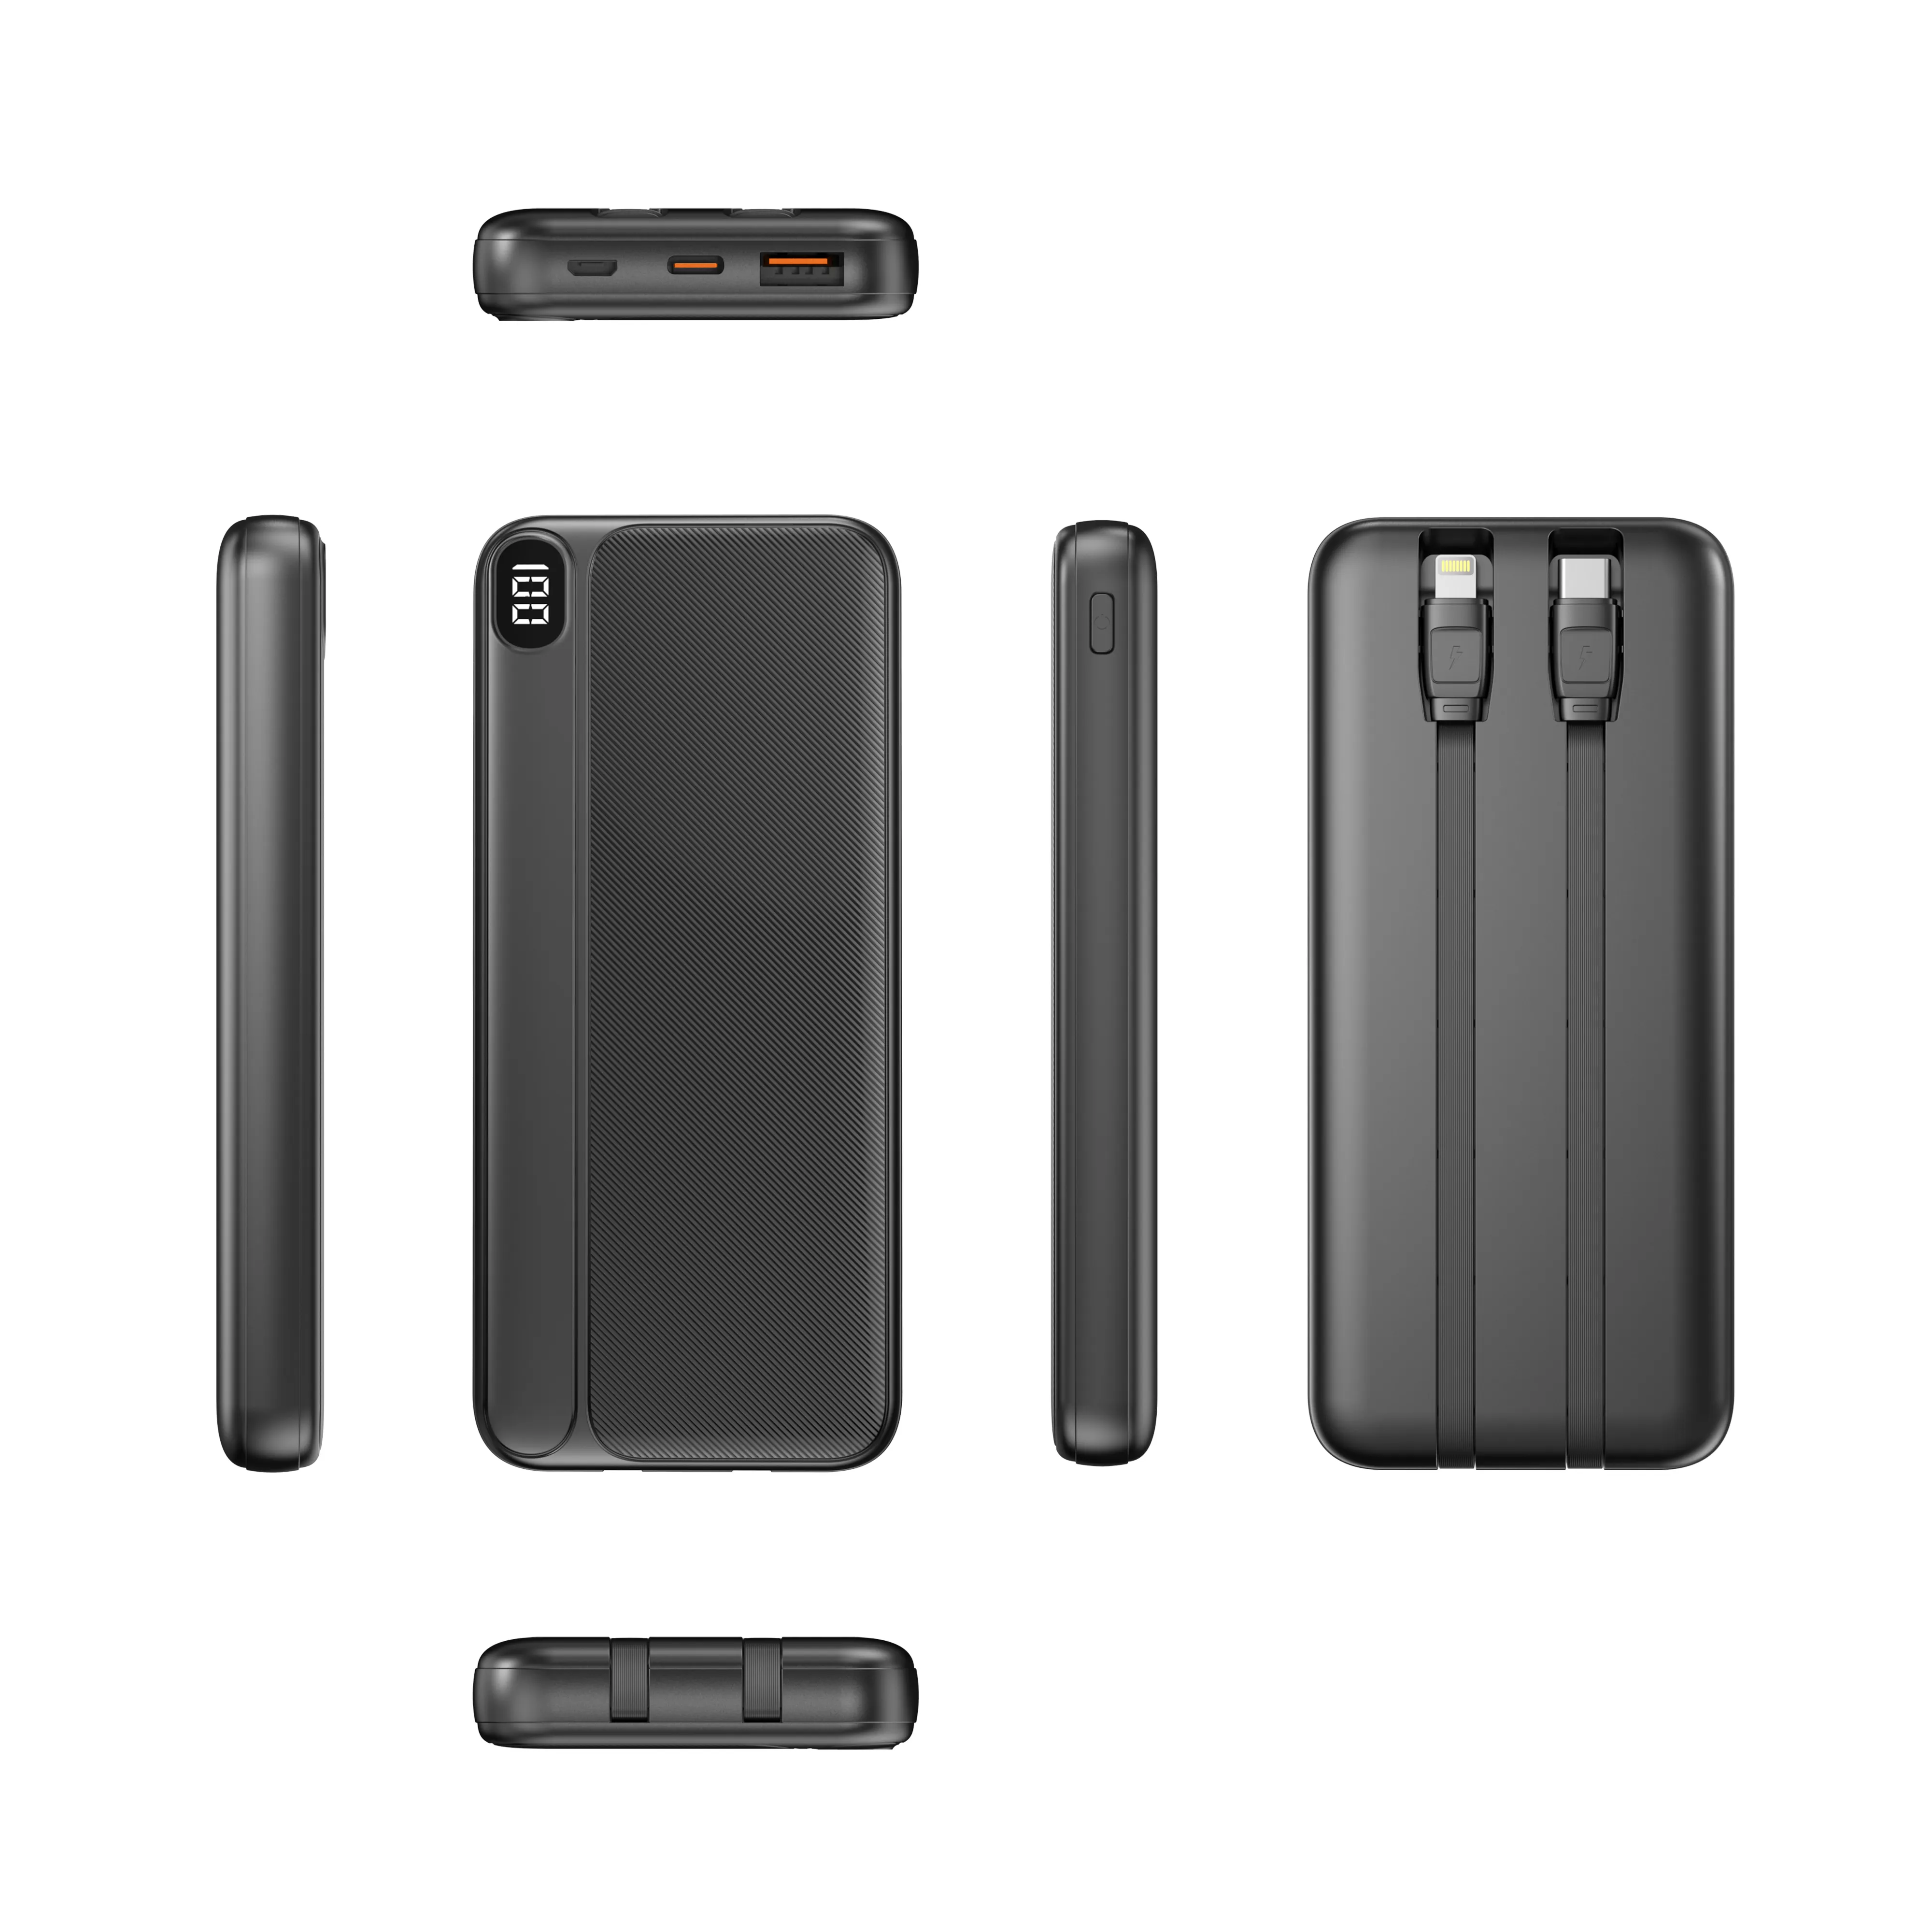 Mini Power Bank 10000mAh Portable Charging Powerbank Mobile Phone Spare External Battery PoverBank For iPhone Samsung Xiaomi